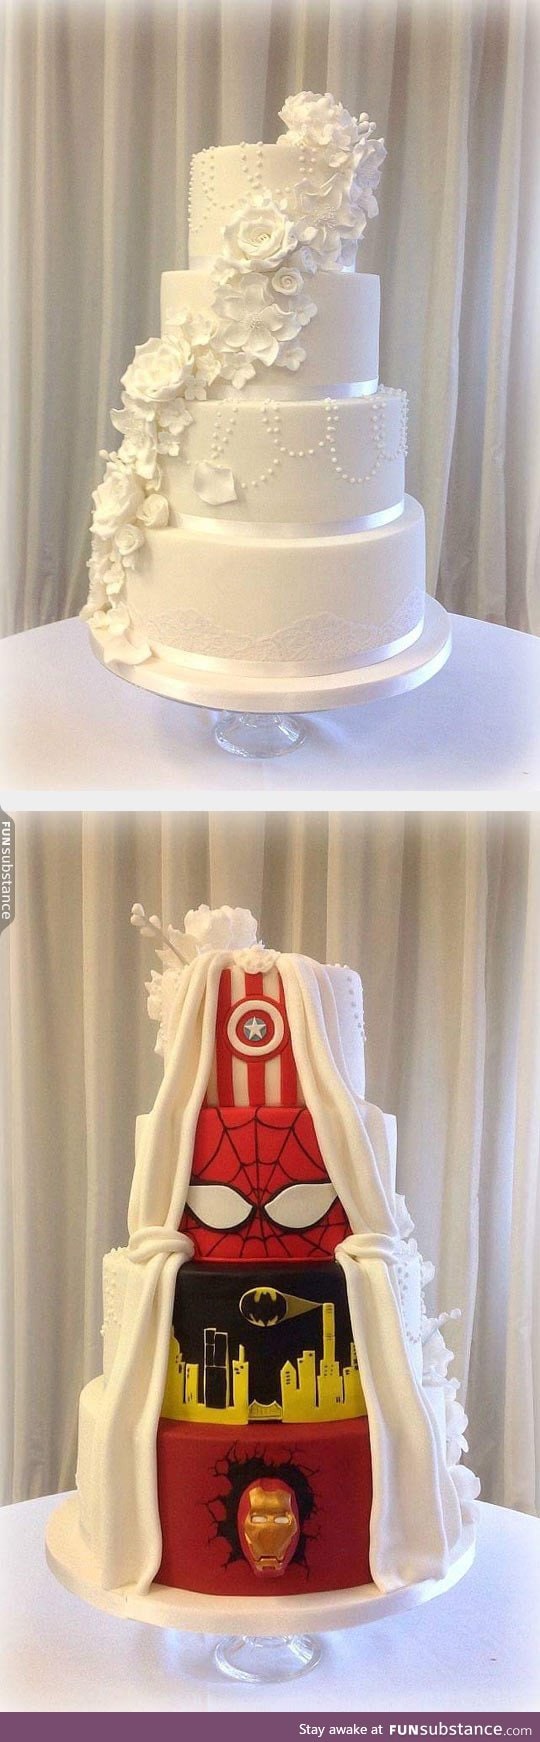 Dual wedding cake